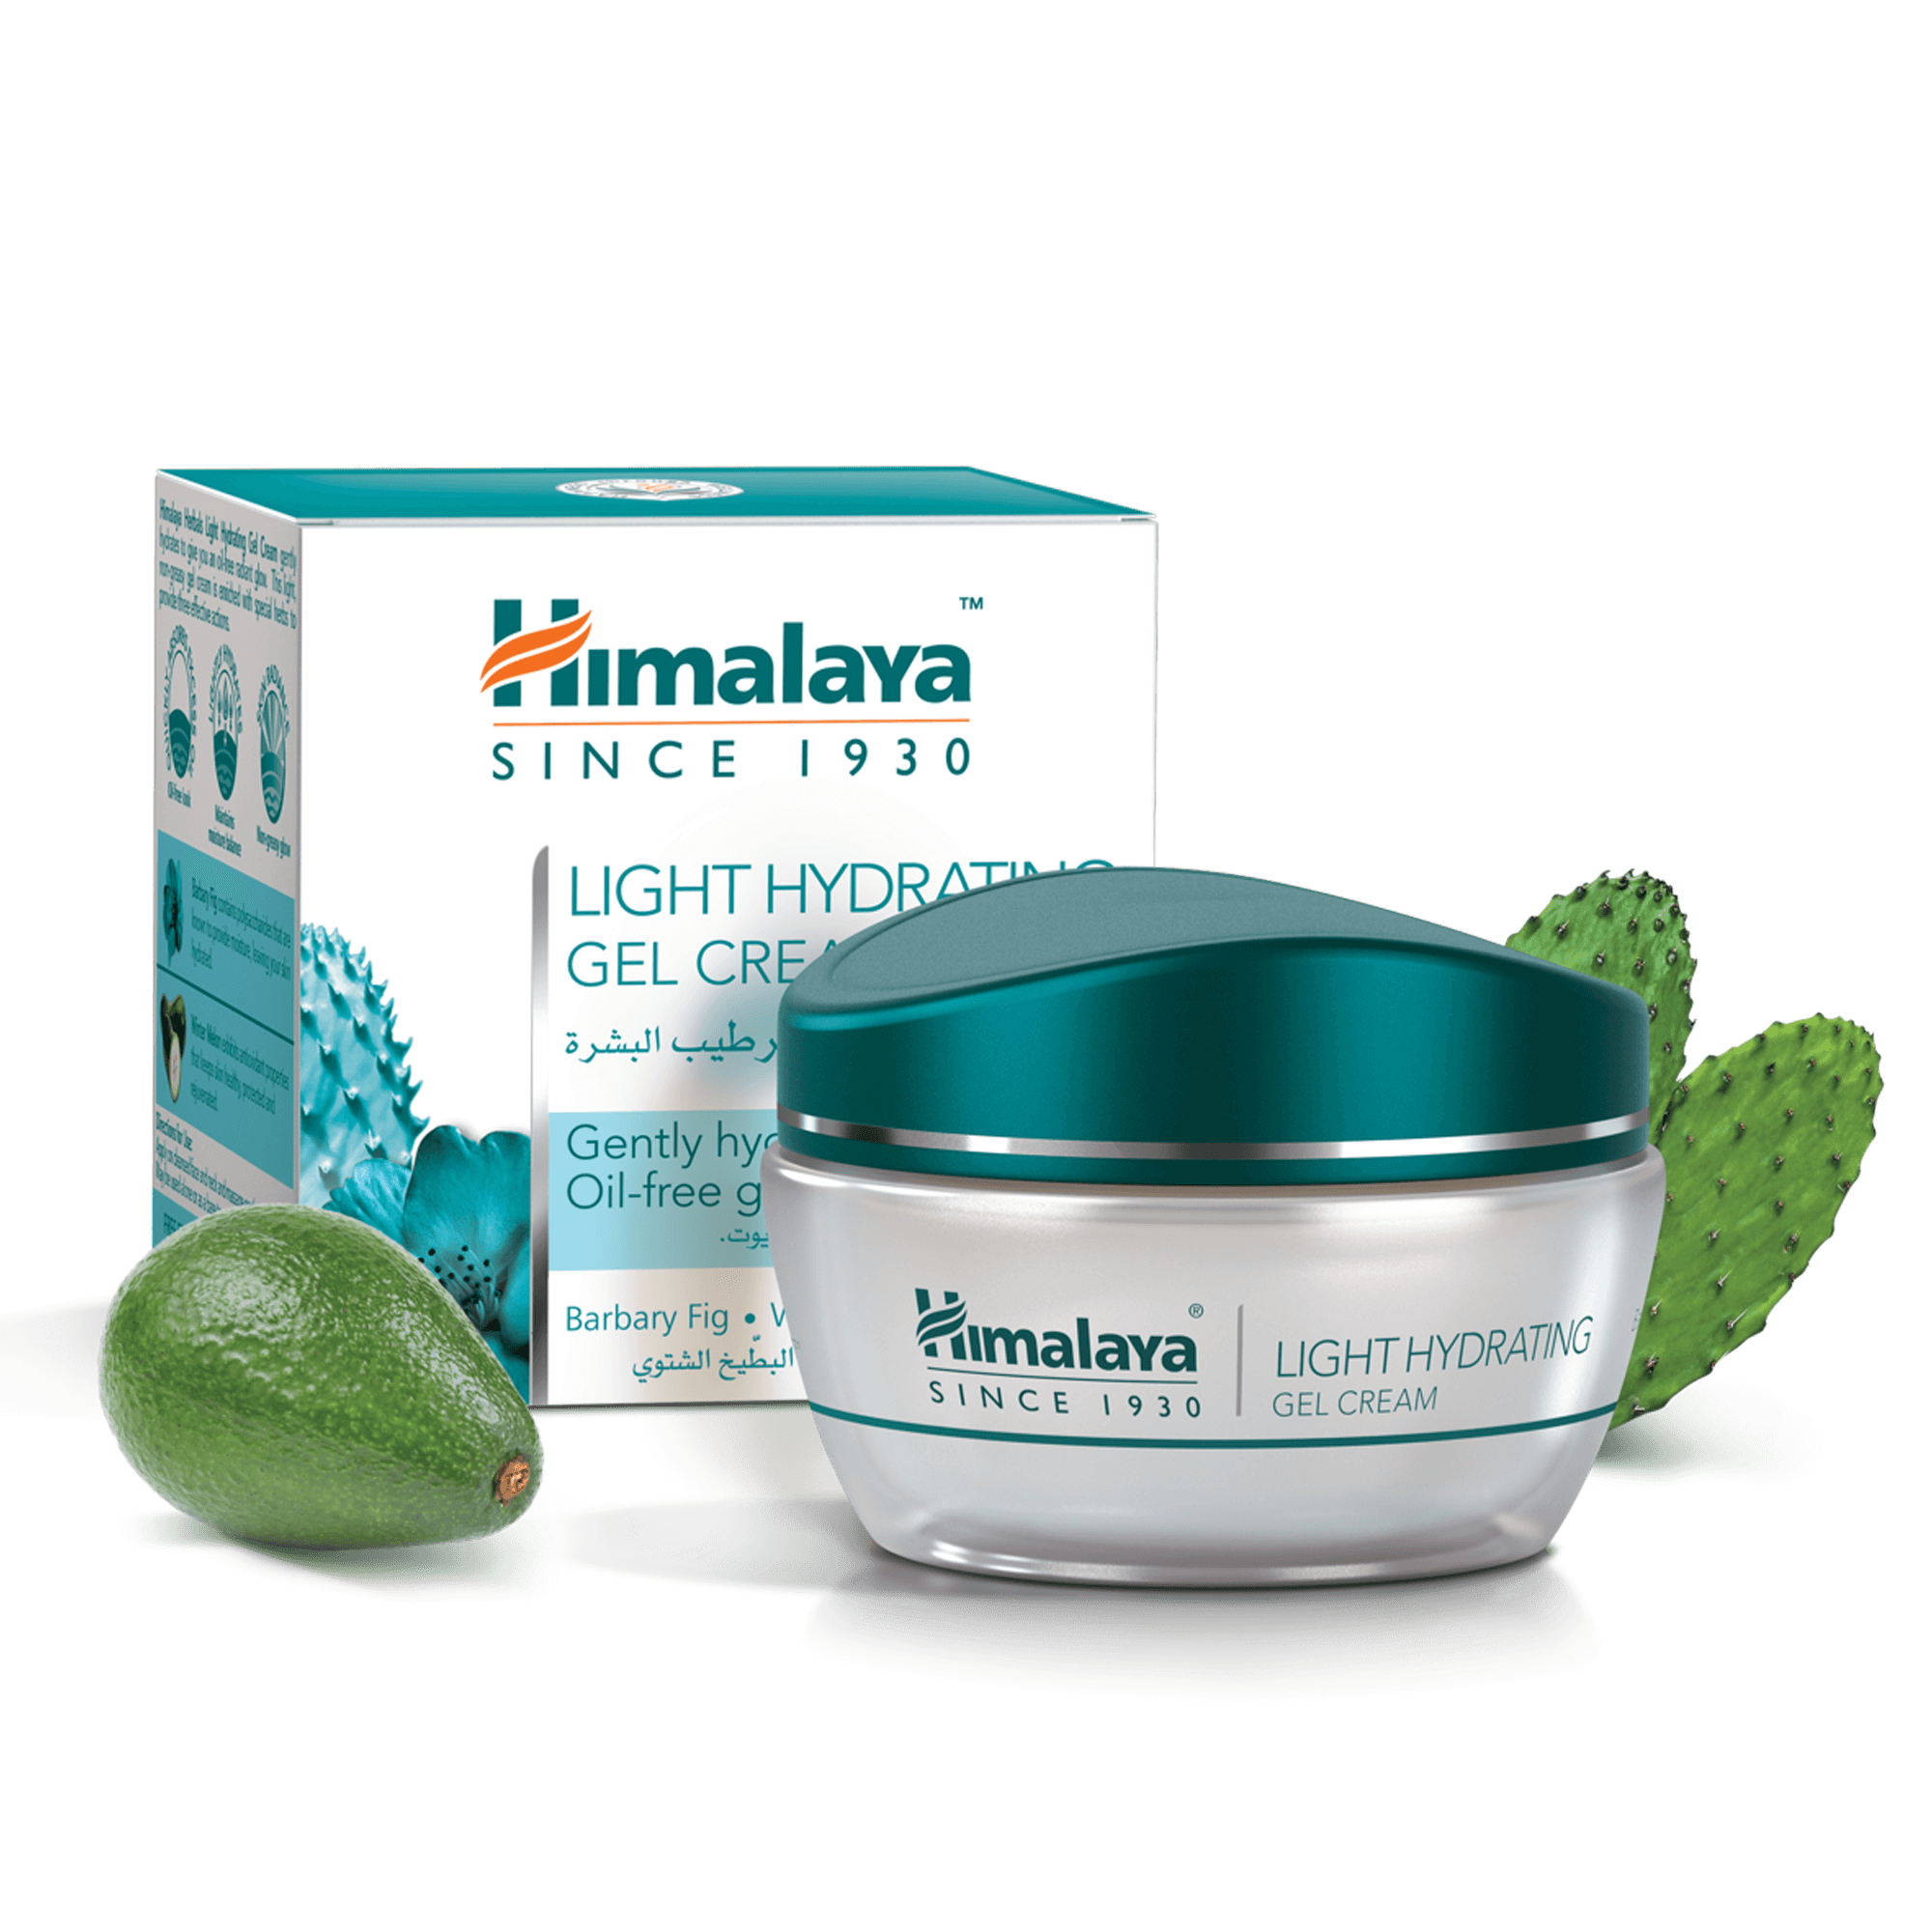 Himalaya Light Hydrating Premium Gel Cream 50g - Oil-free Radiant Glow